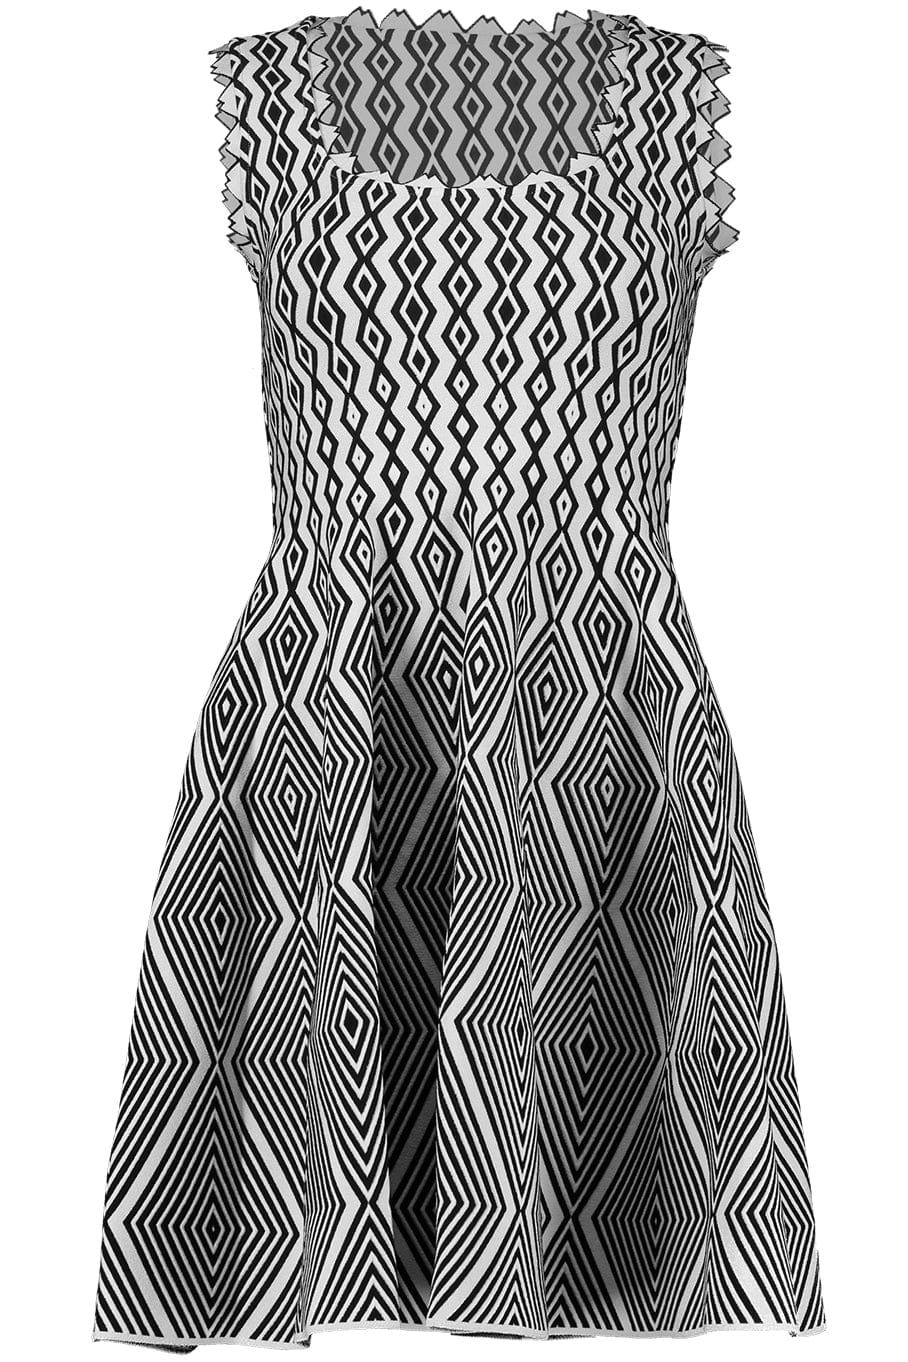 Armonia Mini Dress CLOTHINGDRESSCASUAL ANTONINO VALENTI   